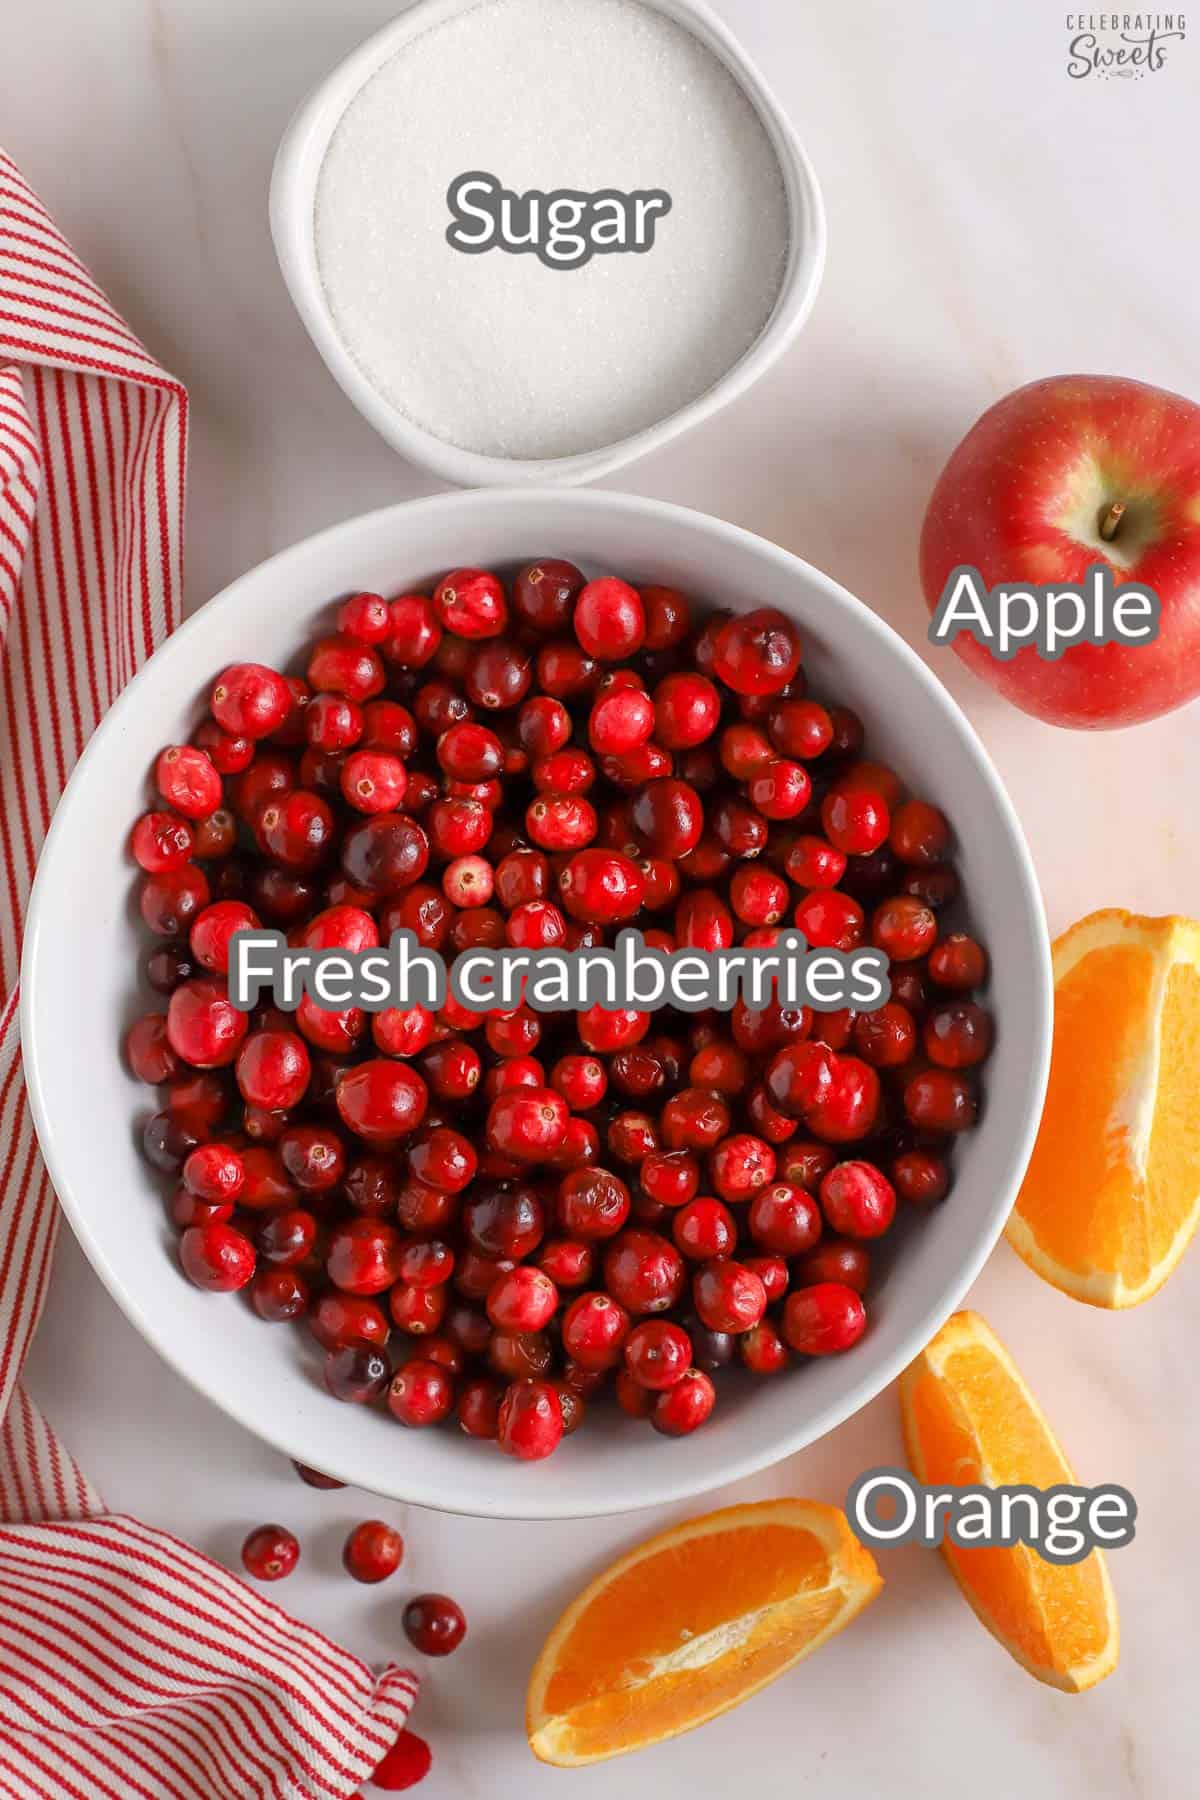 Ingredients for cranberry orange relish: cranberries, orange, apple, sugar.